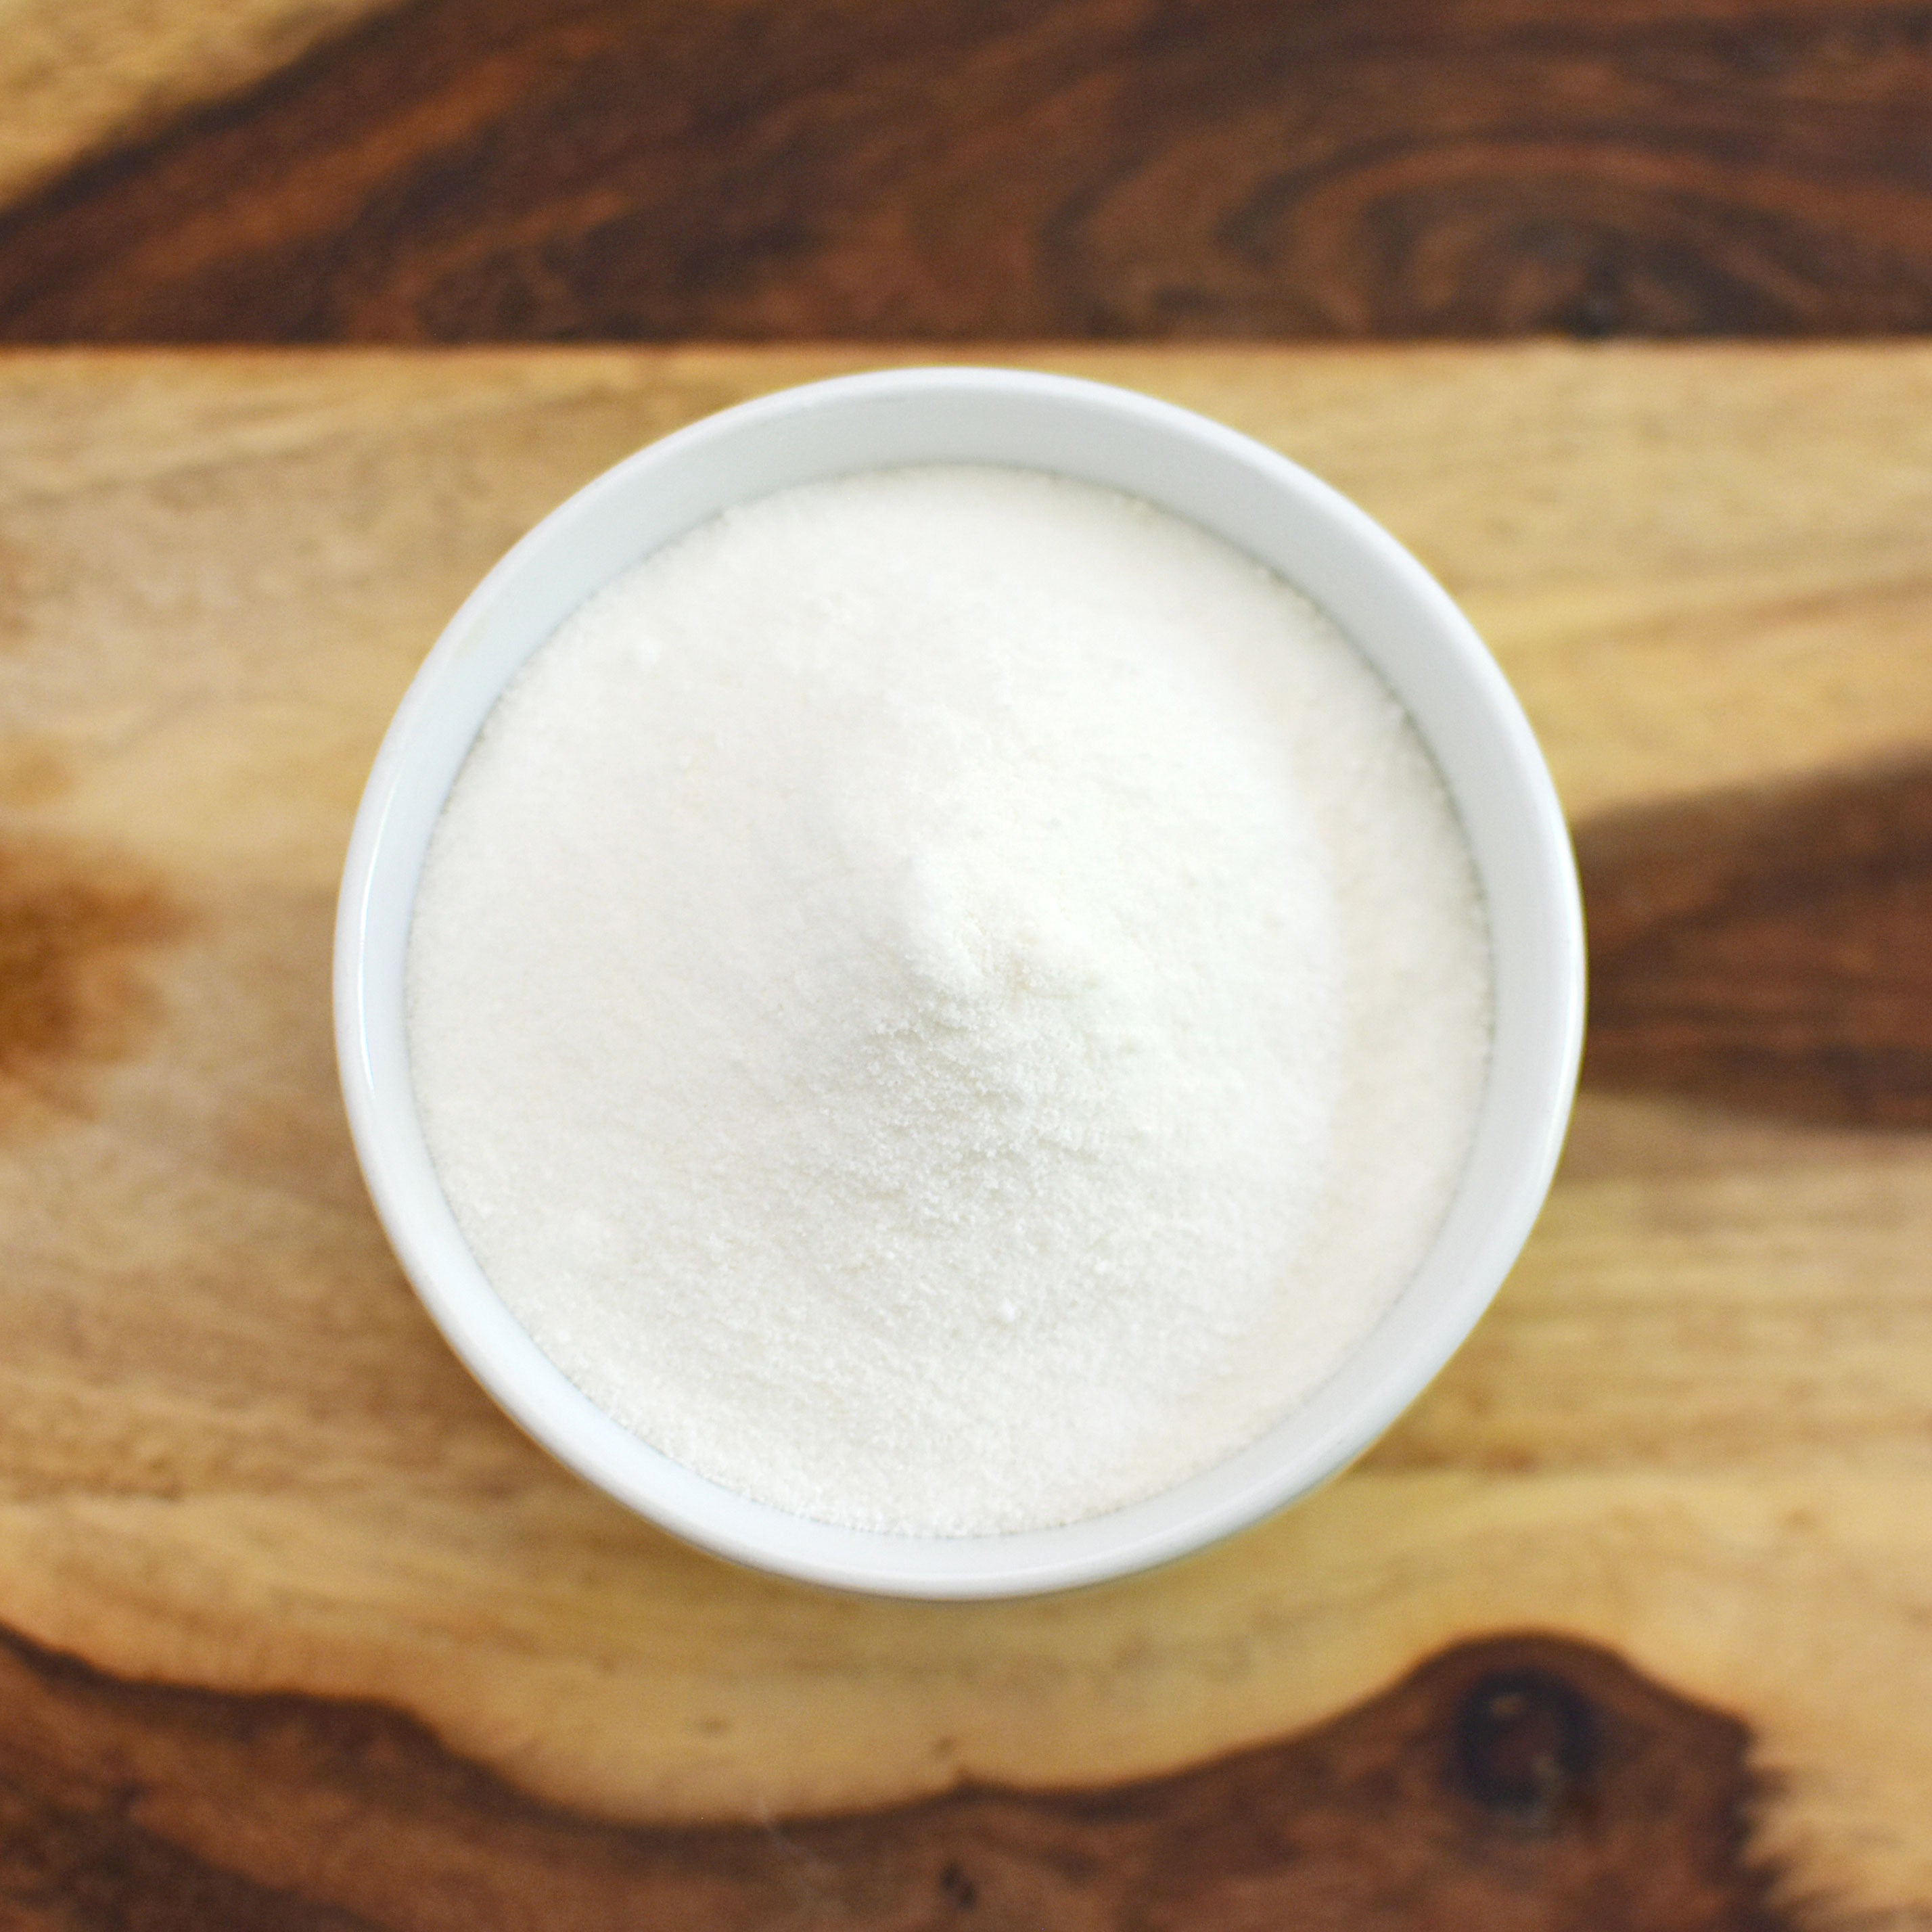 Allulose Sweetener: Gluten Free, Sugar Alternative